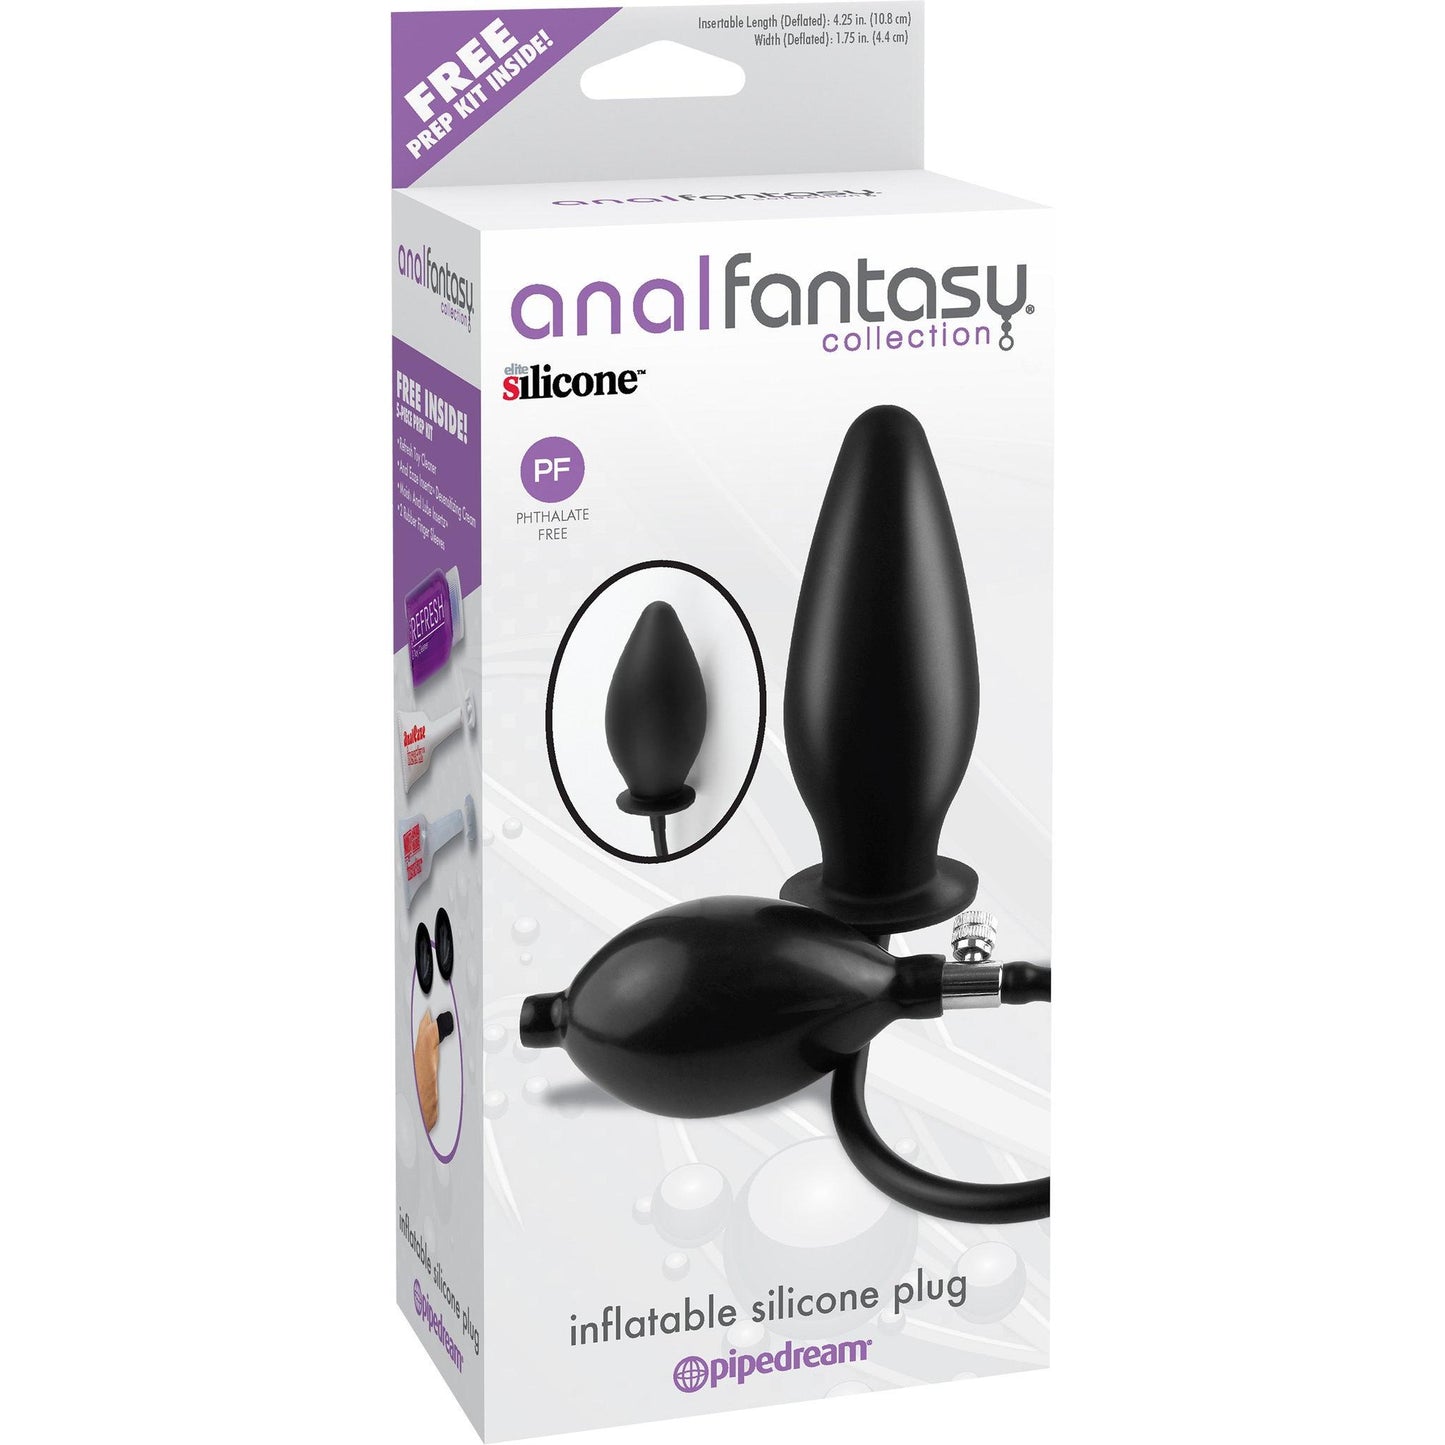 Anal Fantasy Inflatable Silicone Plug & FREE 5 Piece Kit